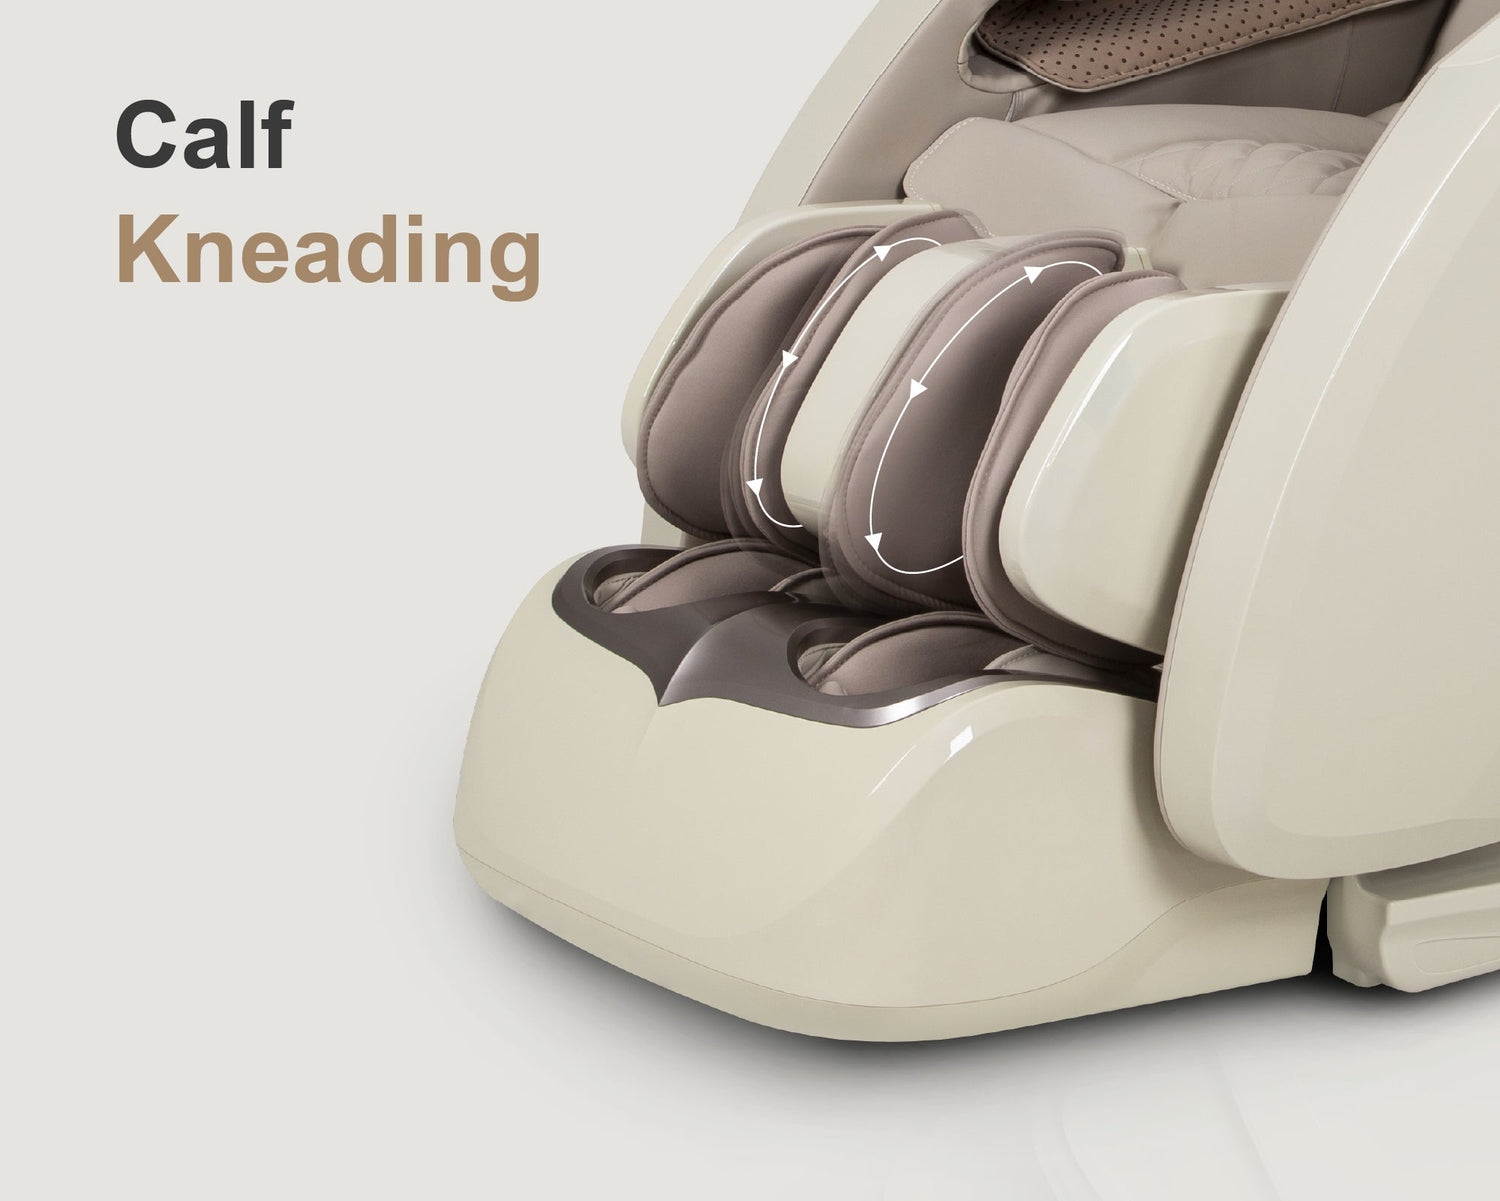 Calf Kneading